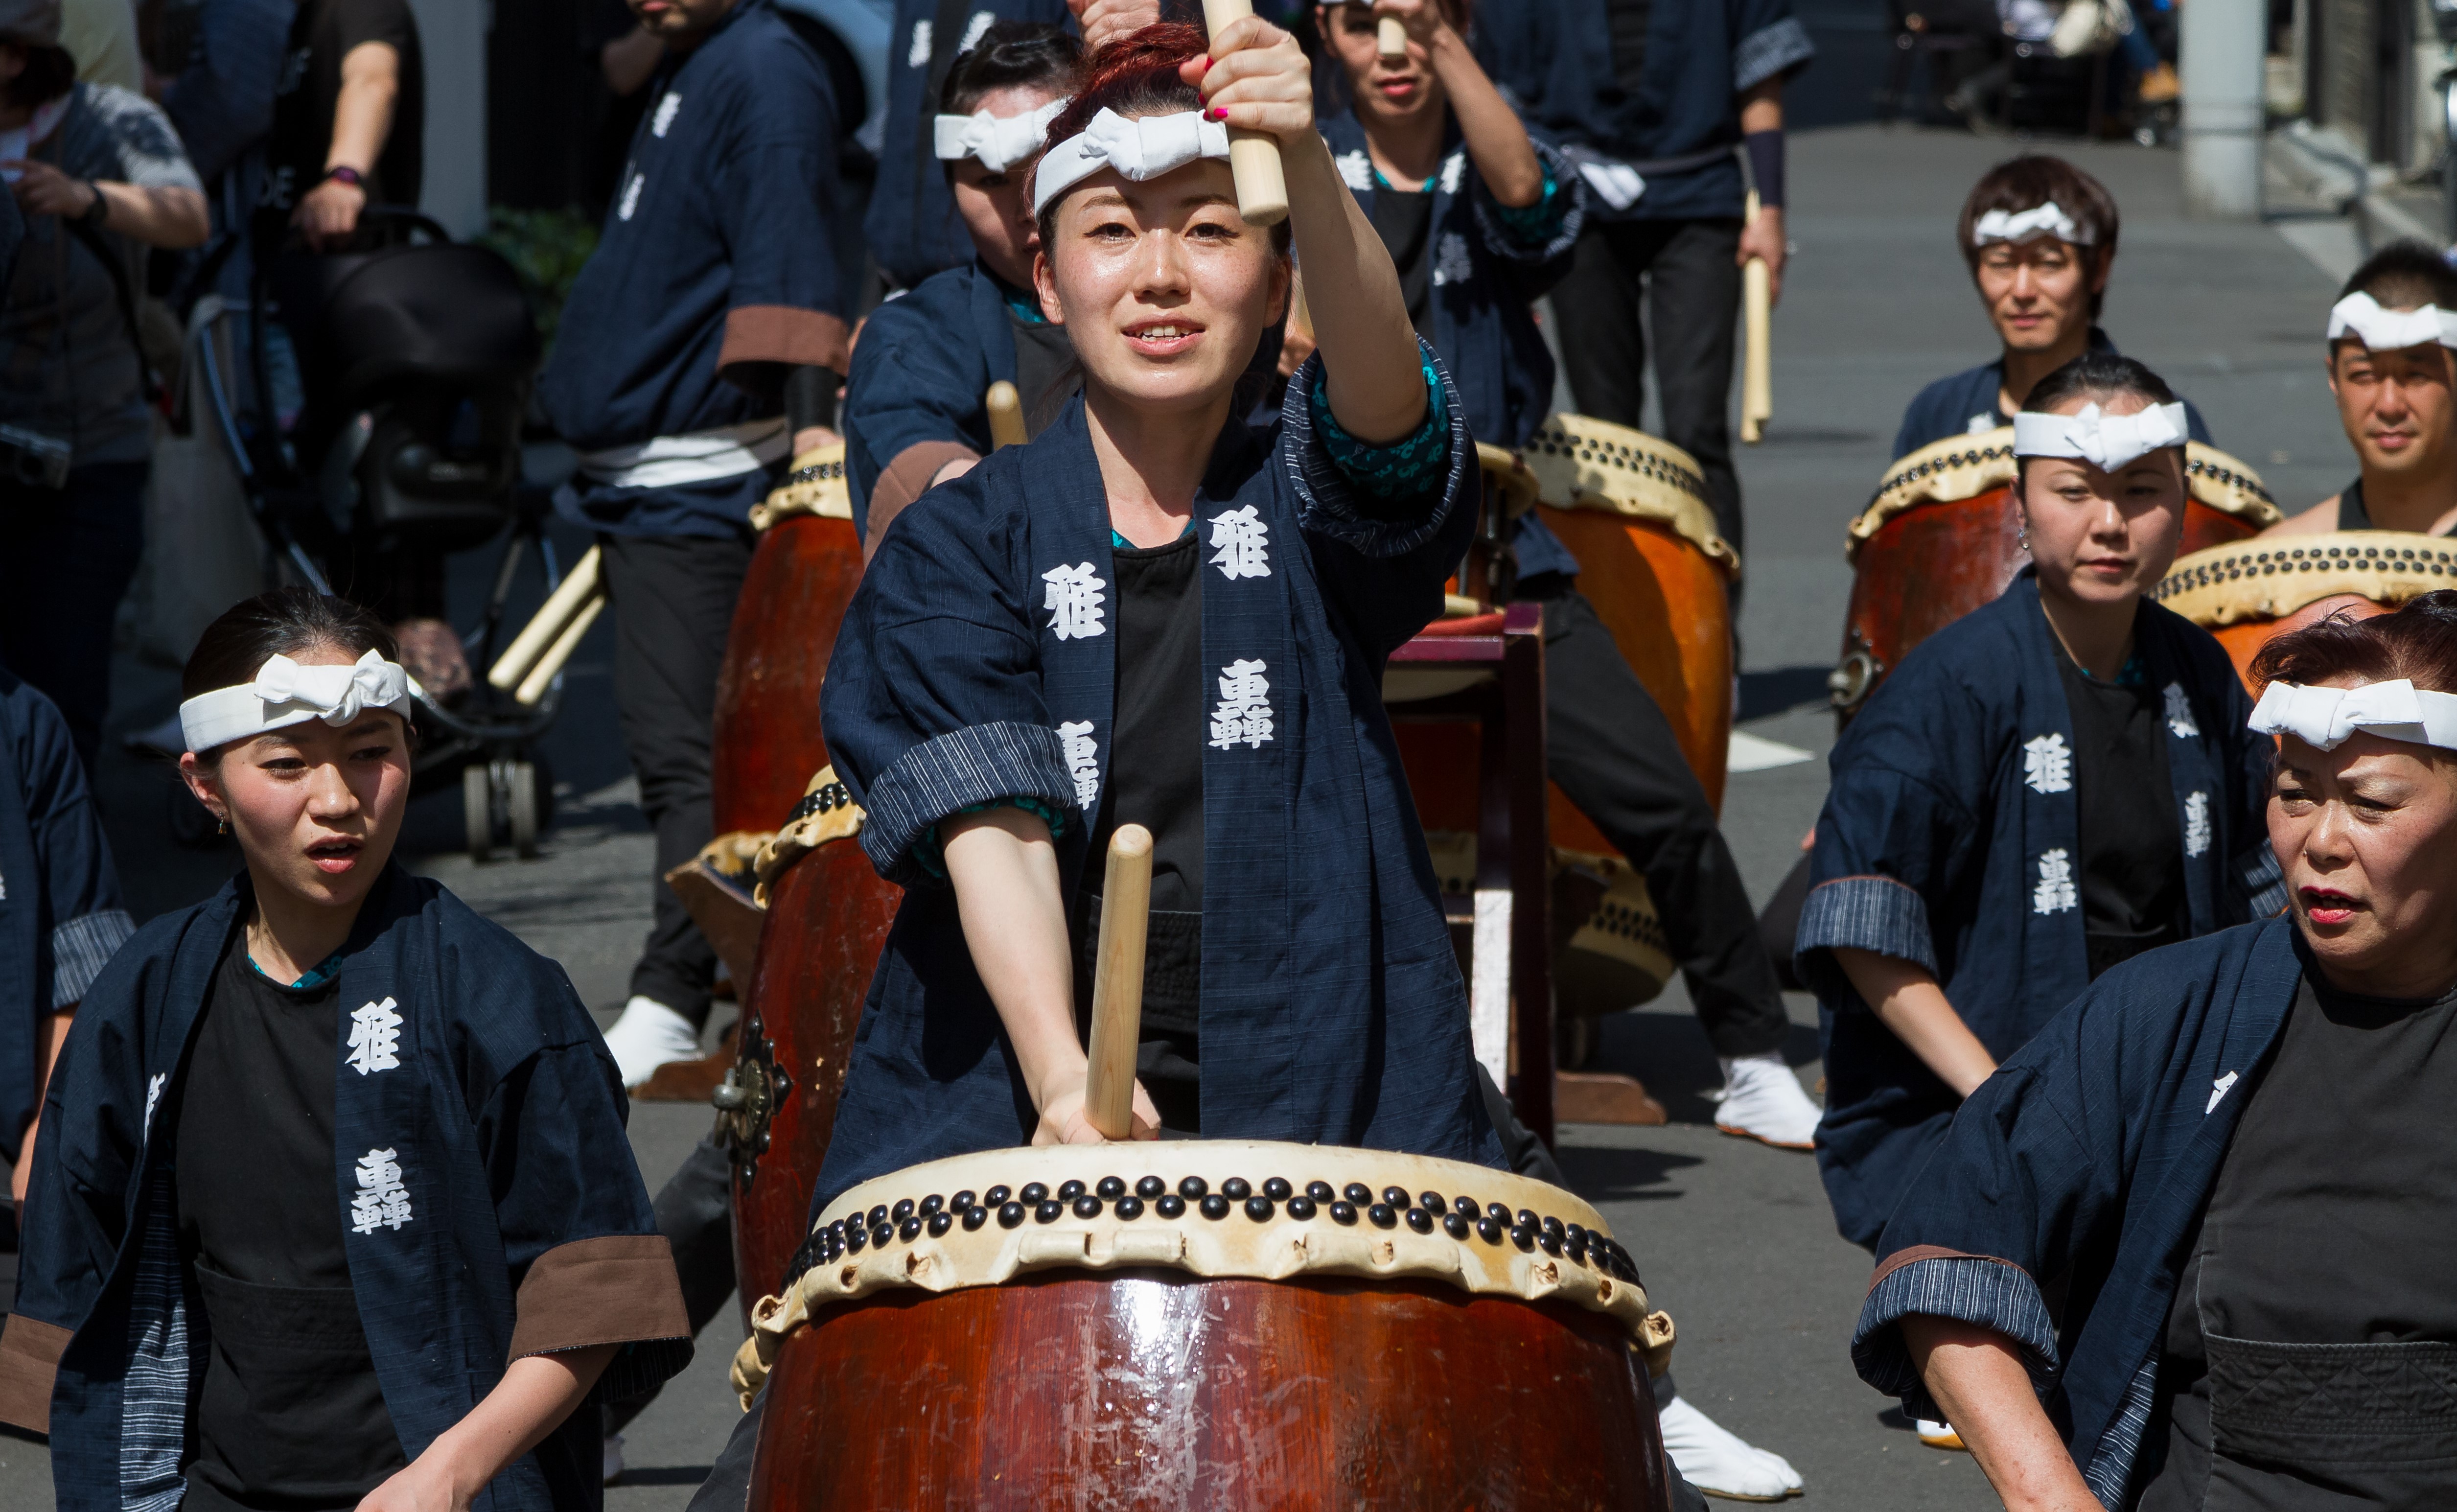 Women playing taiko drums during the Sanja matsuri festival in Asakusa, Japan. (Photo: Damon Coulter/Getty Images